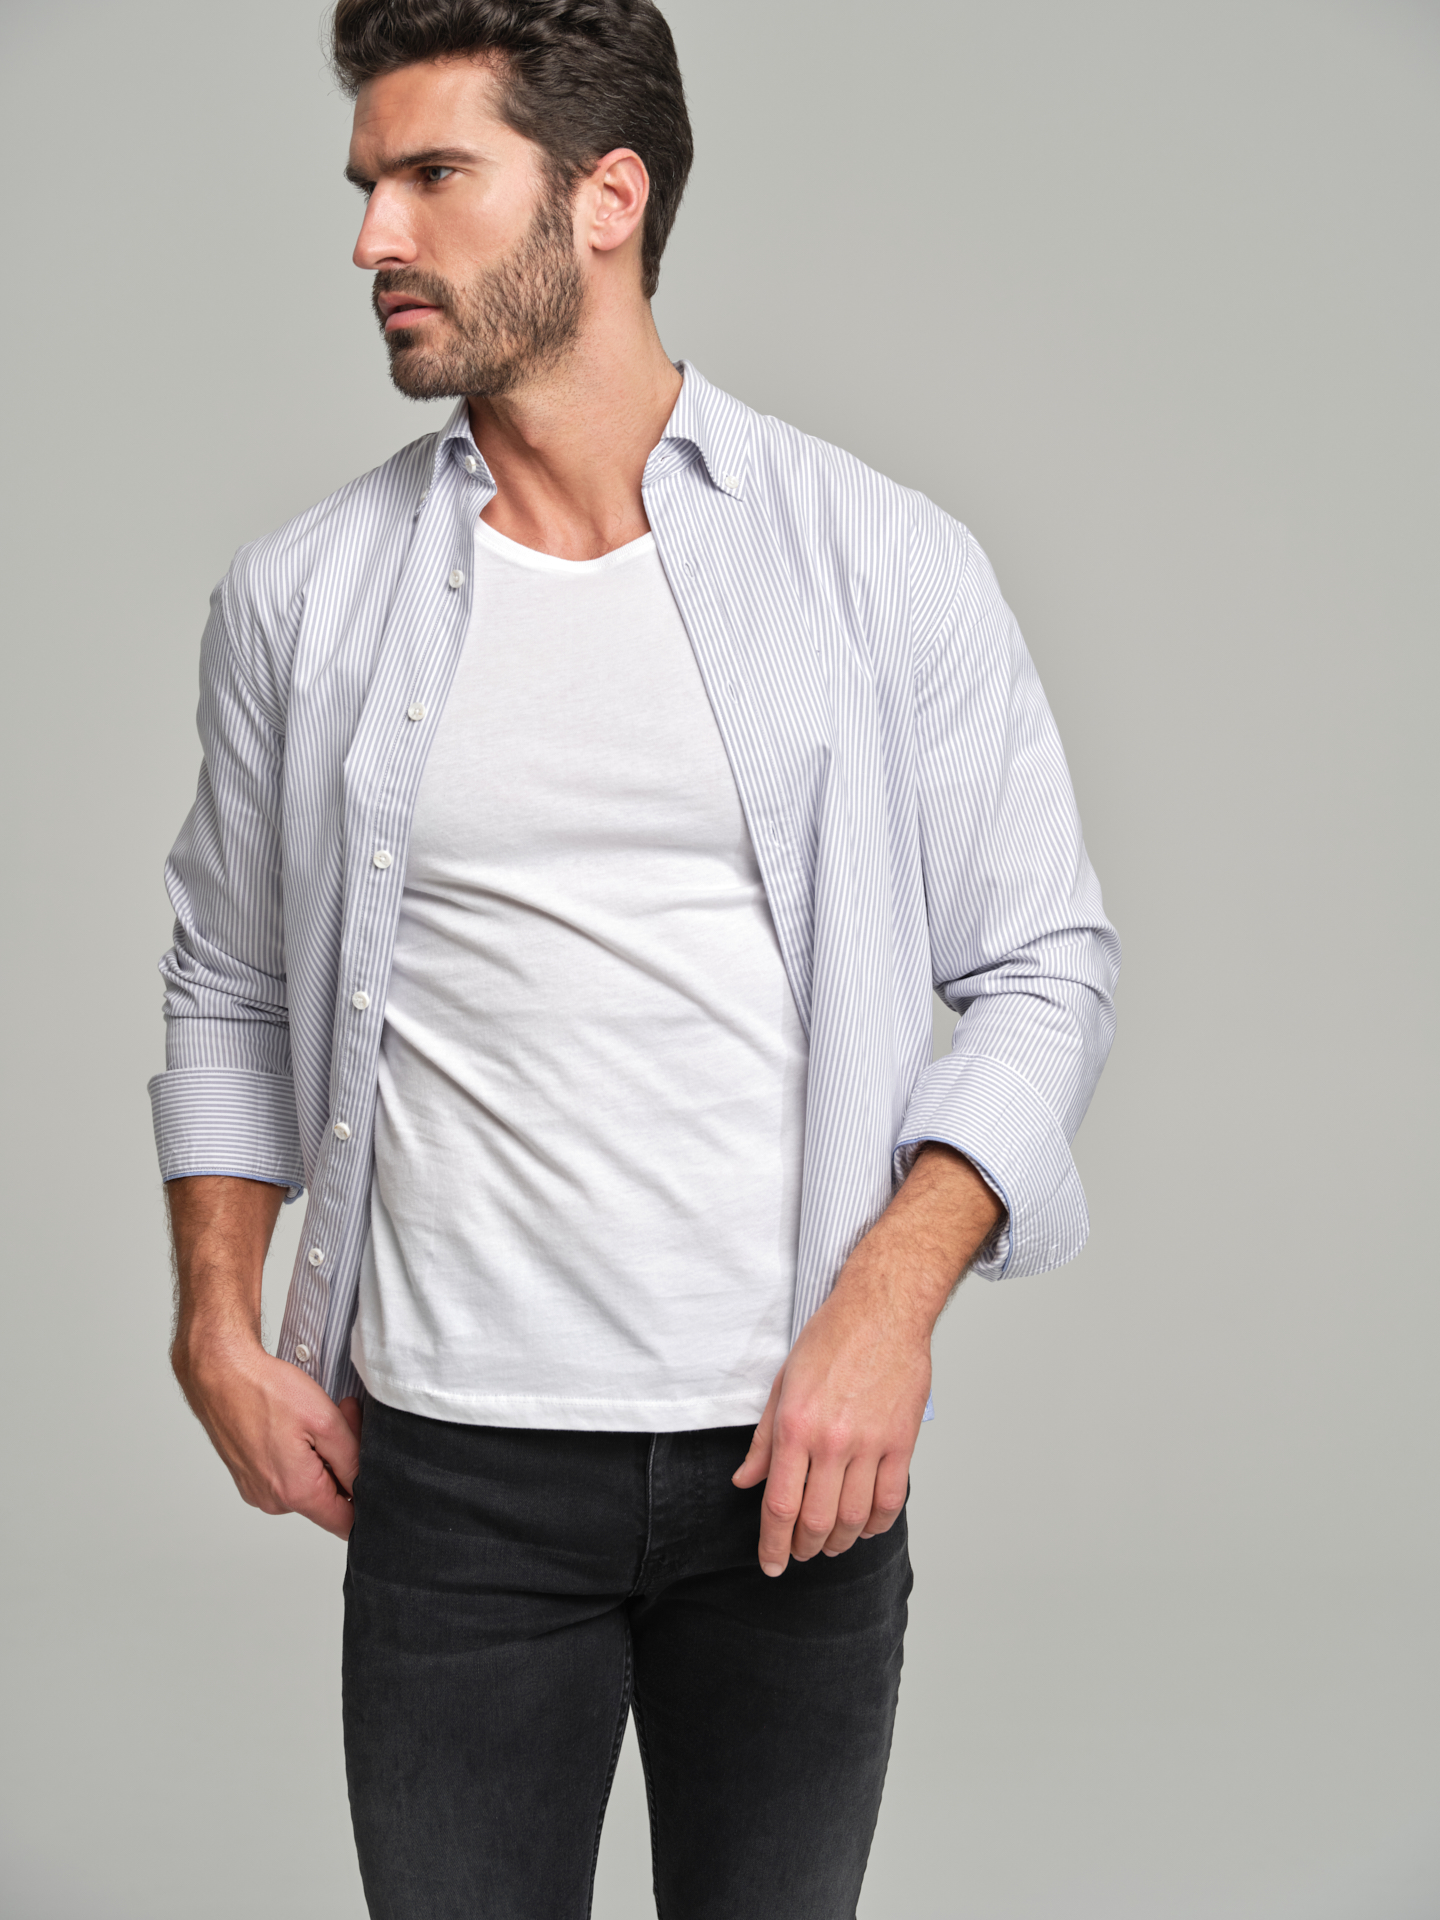 Shirt Sport Light Grey Casual Man